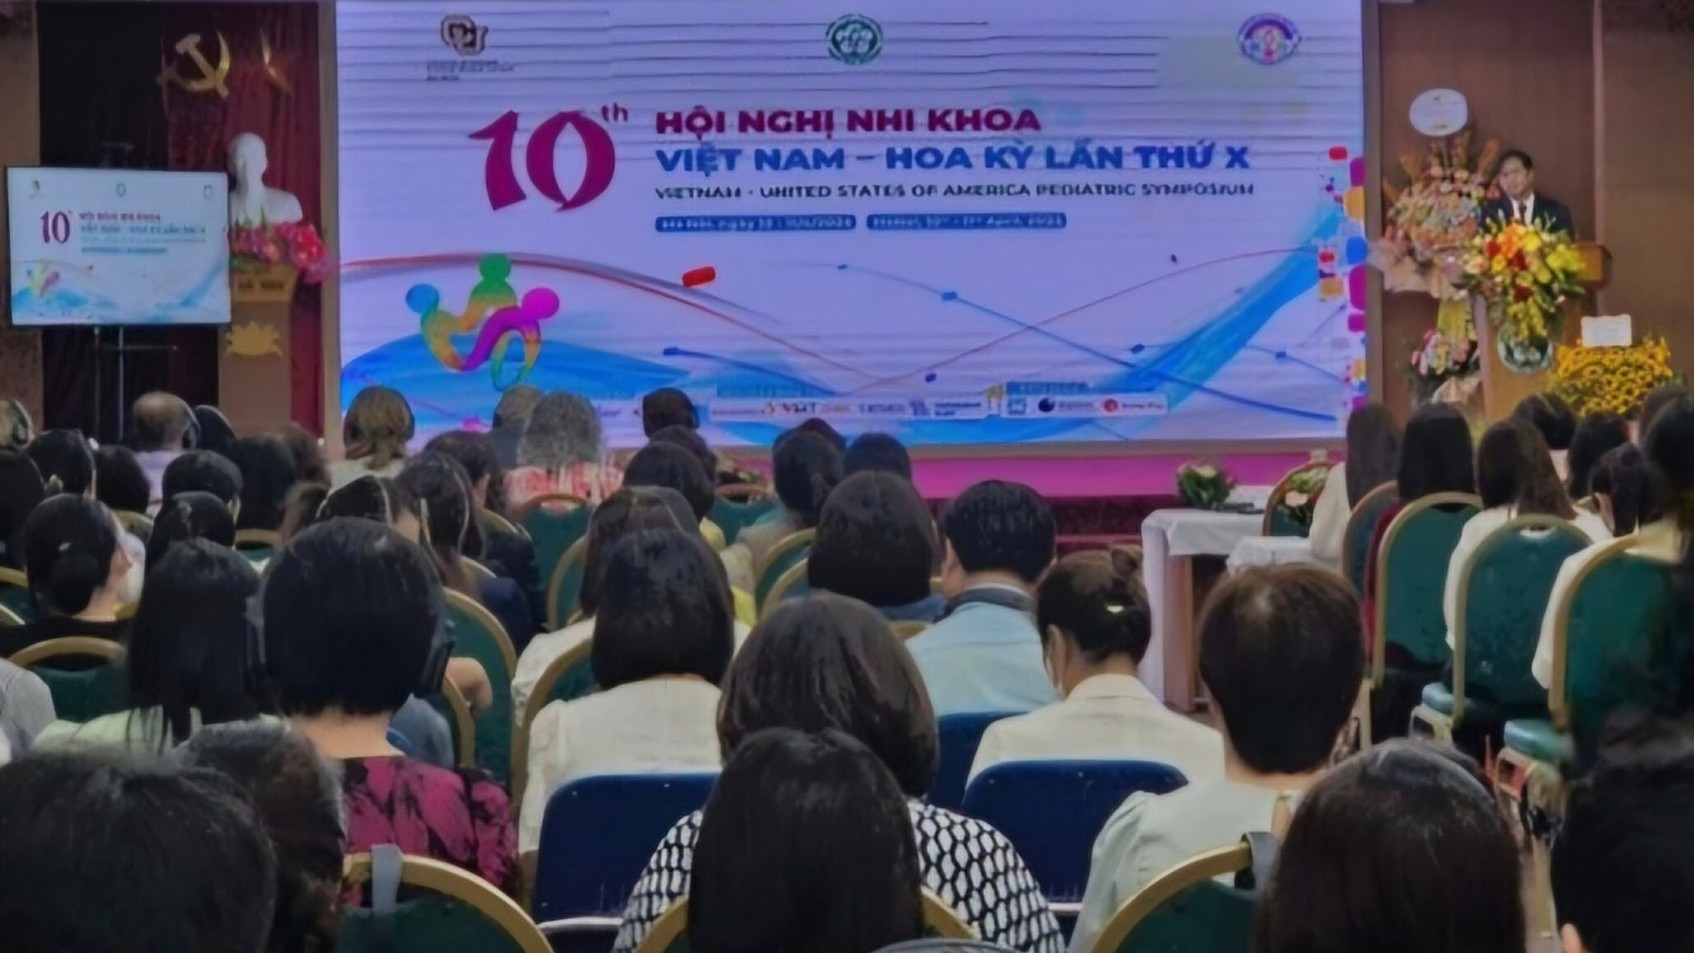 Khai mạc Hội nghị Nhi khoa Việt Nam - Hoa Kỳ lần thứ 10